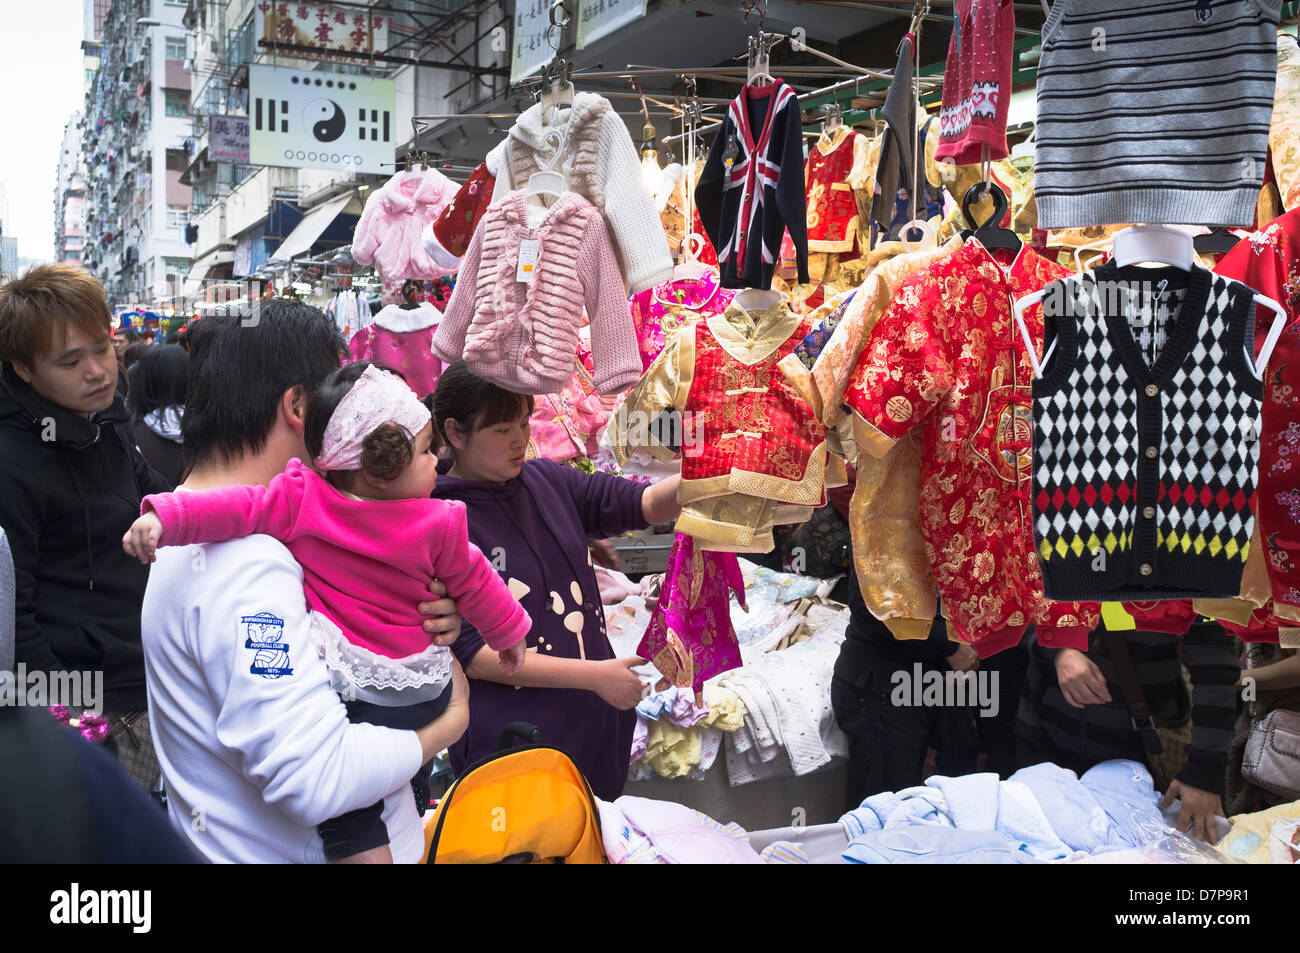 dh Ladies Market MONG KOK HONGKONG Chinesisches Familienshoppen Kinder Kleidung Markt Stand Kinder asien Street Kunde Stockfoto